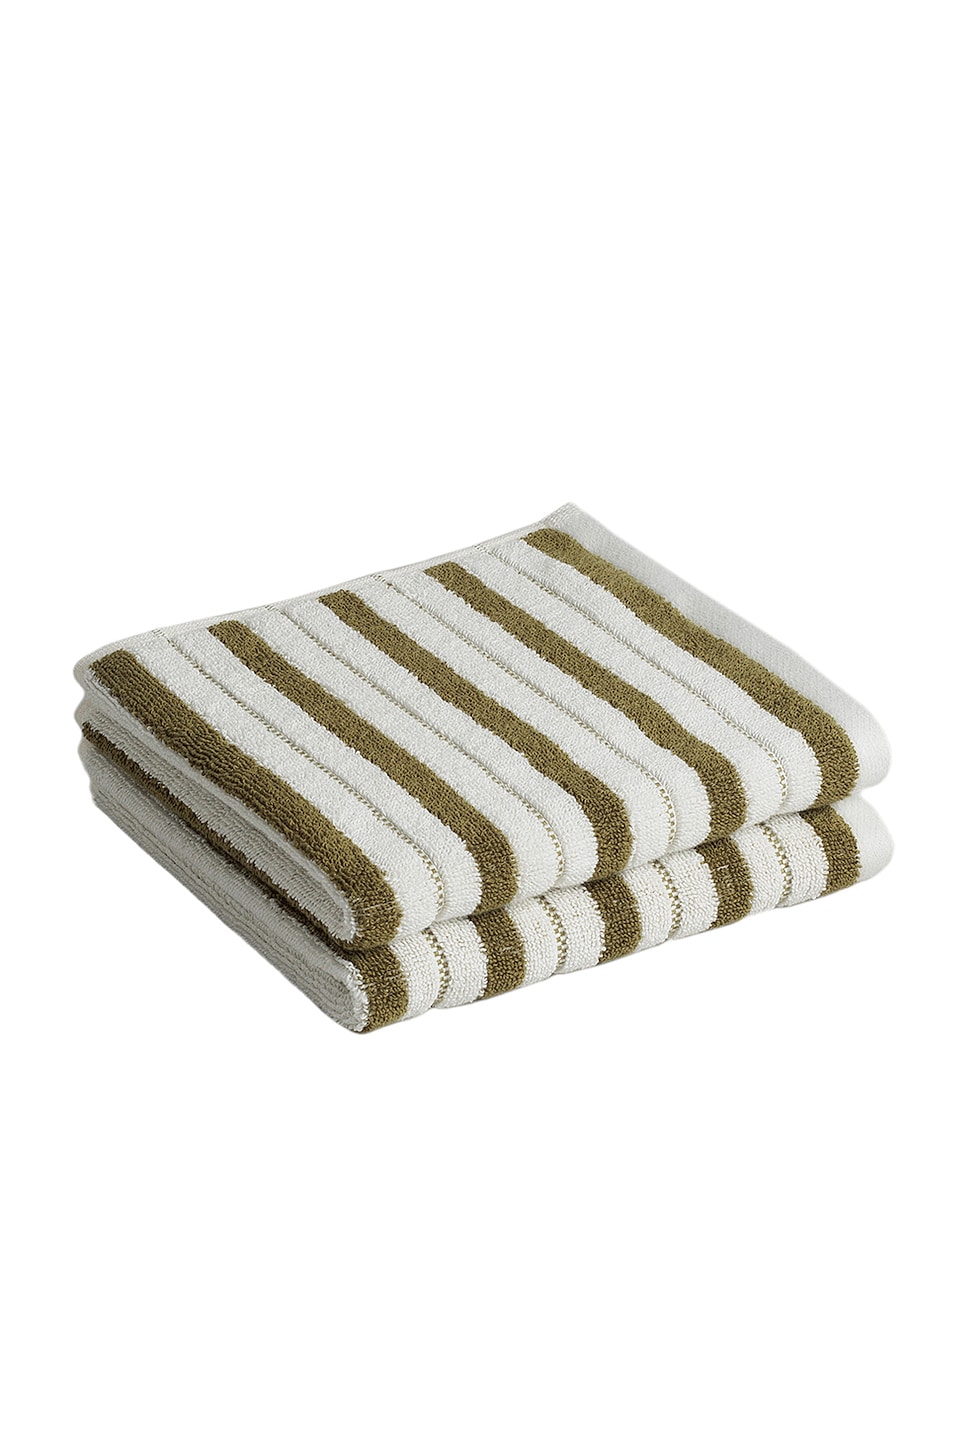 Image 1 of BAINA Hand Towel Set in Caper & Chalk